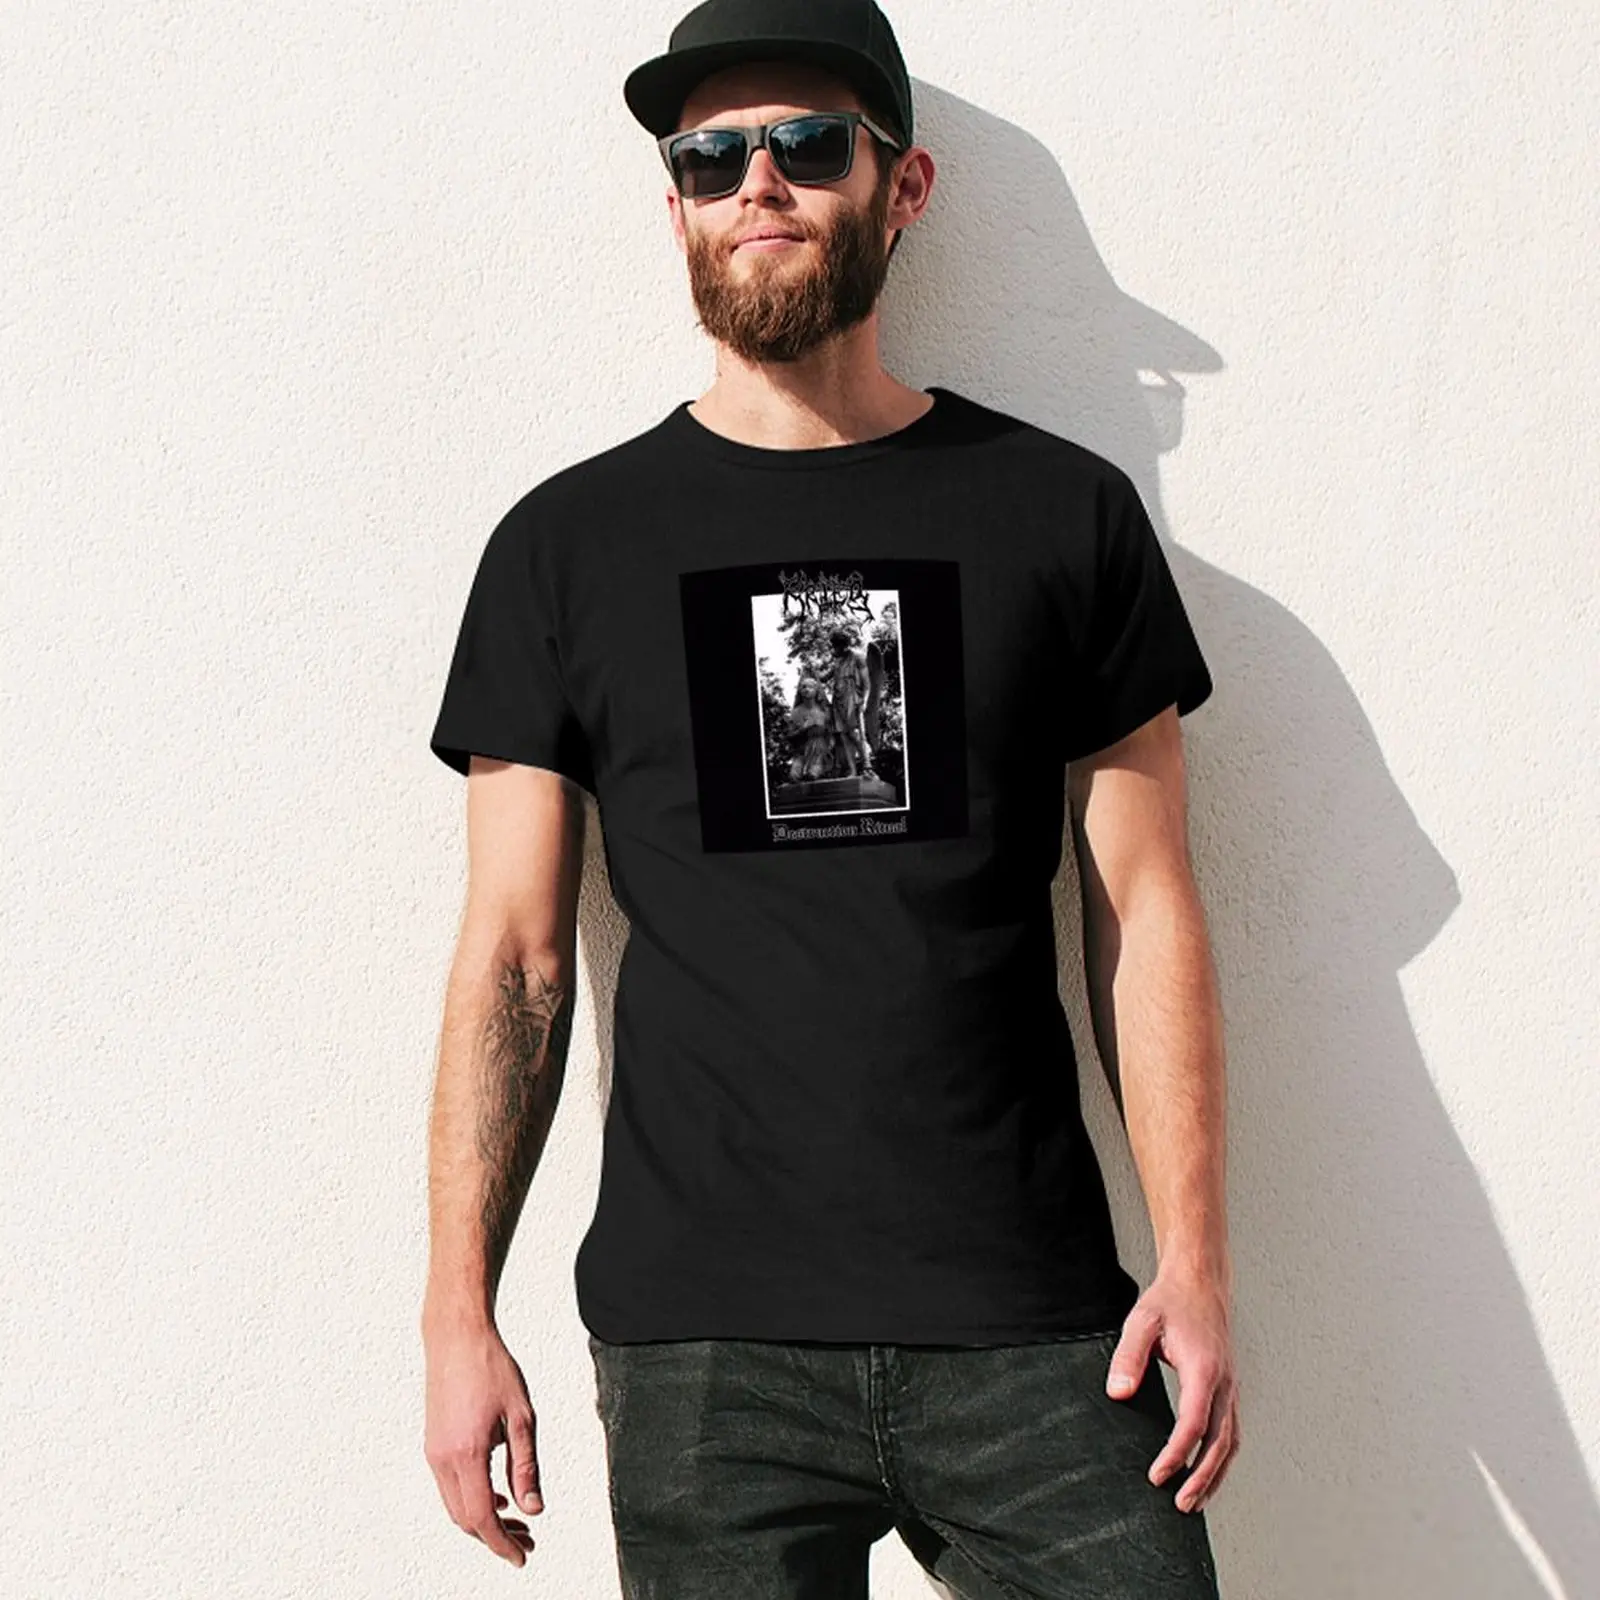 Krieg black metal, Metal Gift , brutal Death metal T-Shirt and sticker T-Shirt Blouse plus size tops clothes for men